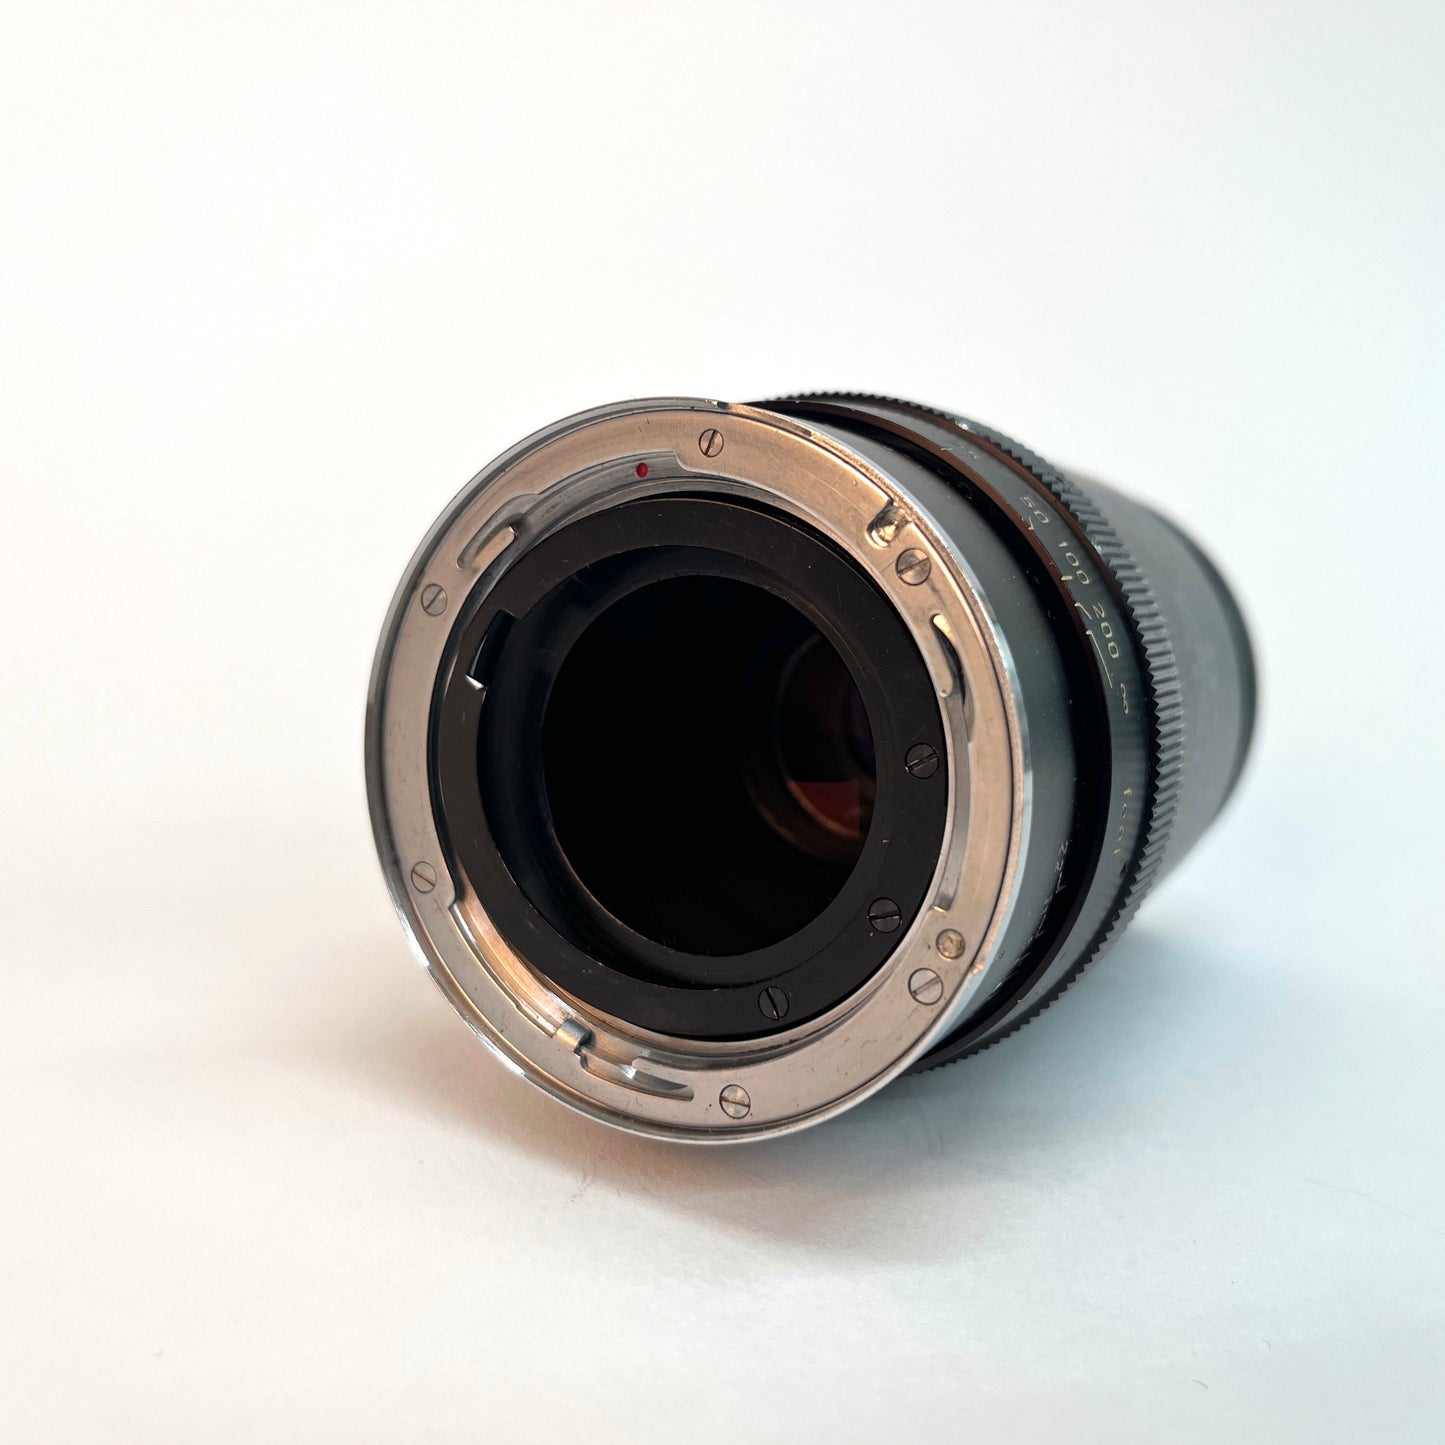 Contarex "All Black" 135mm f/4 Sonnar Lens VERY Rare